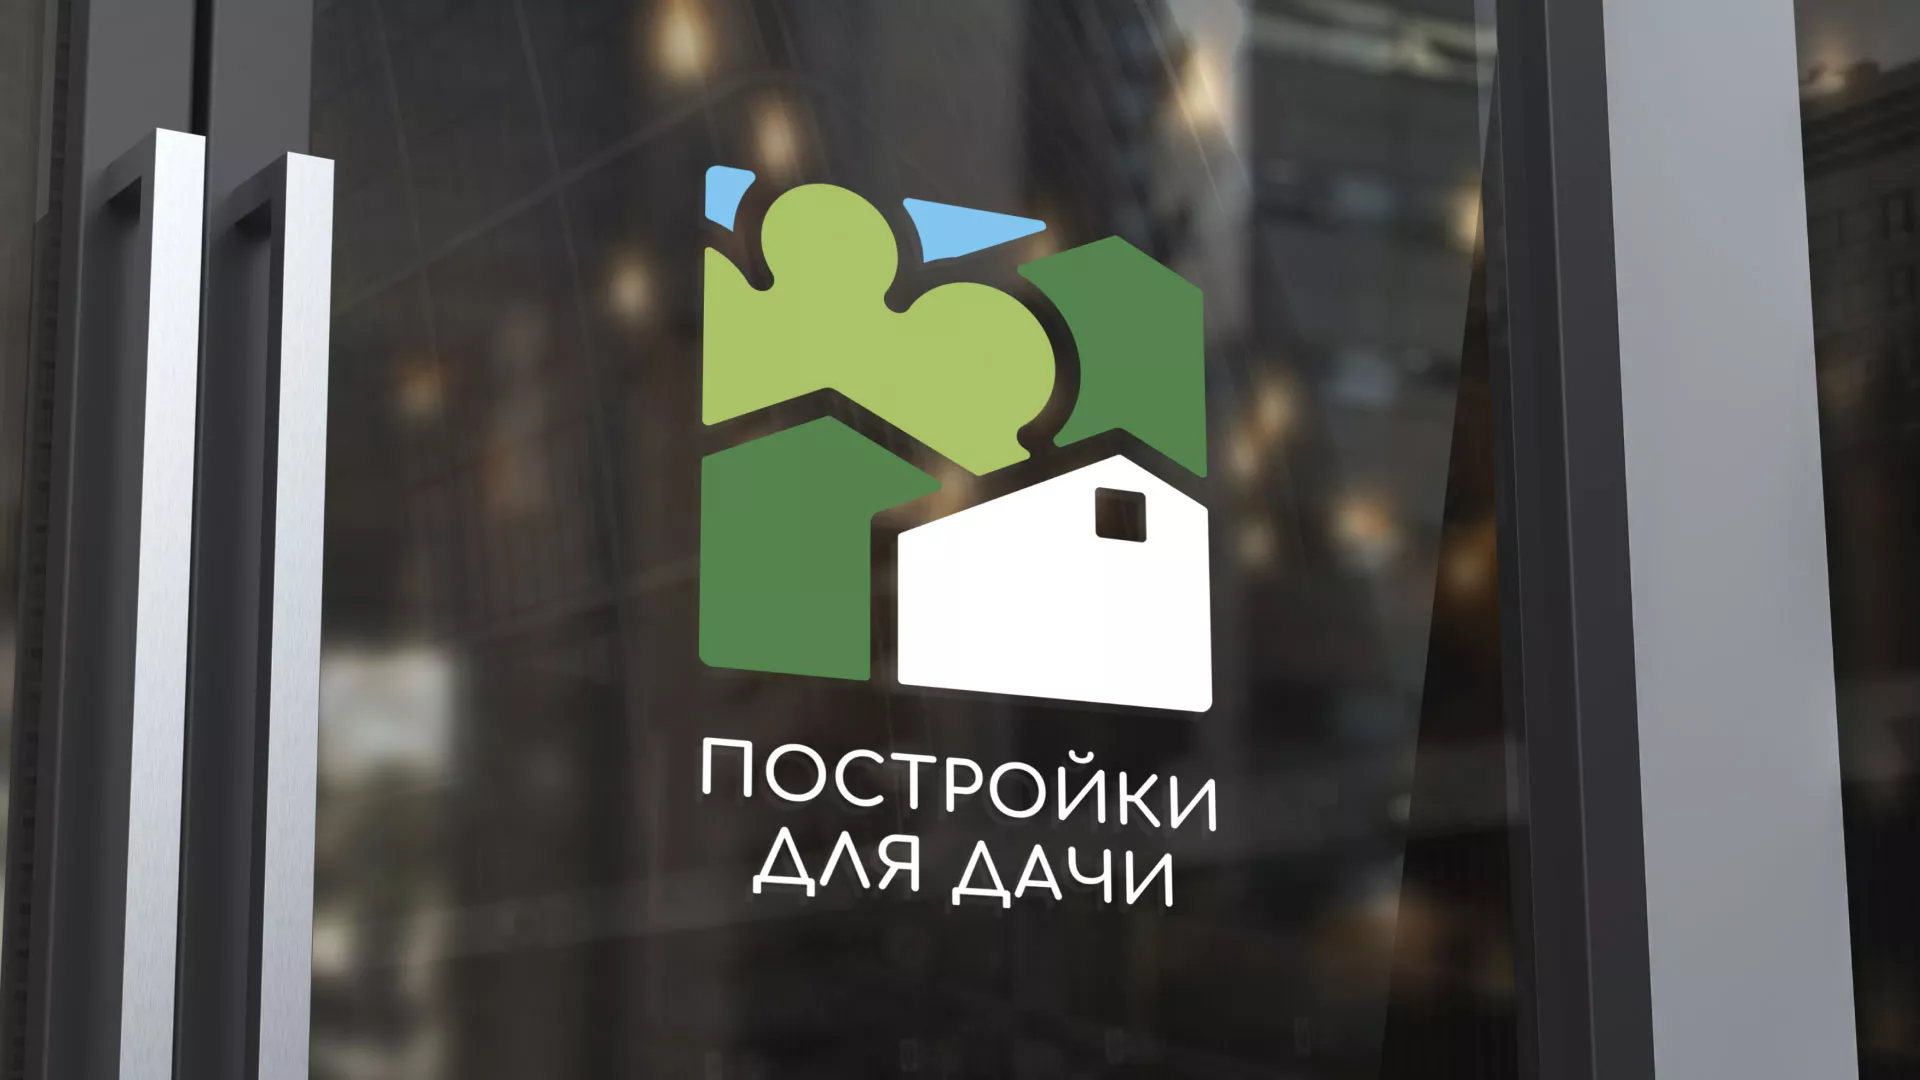 Разработка логотипа в Асино для компании «Постройки для дачи»